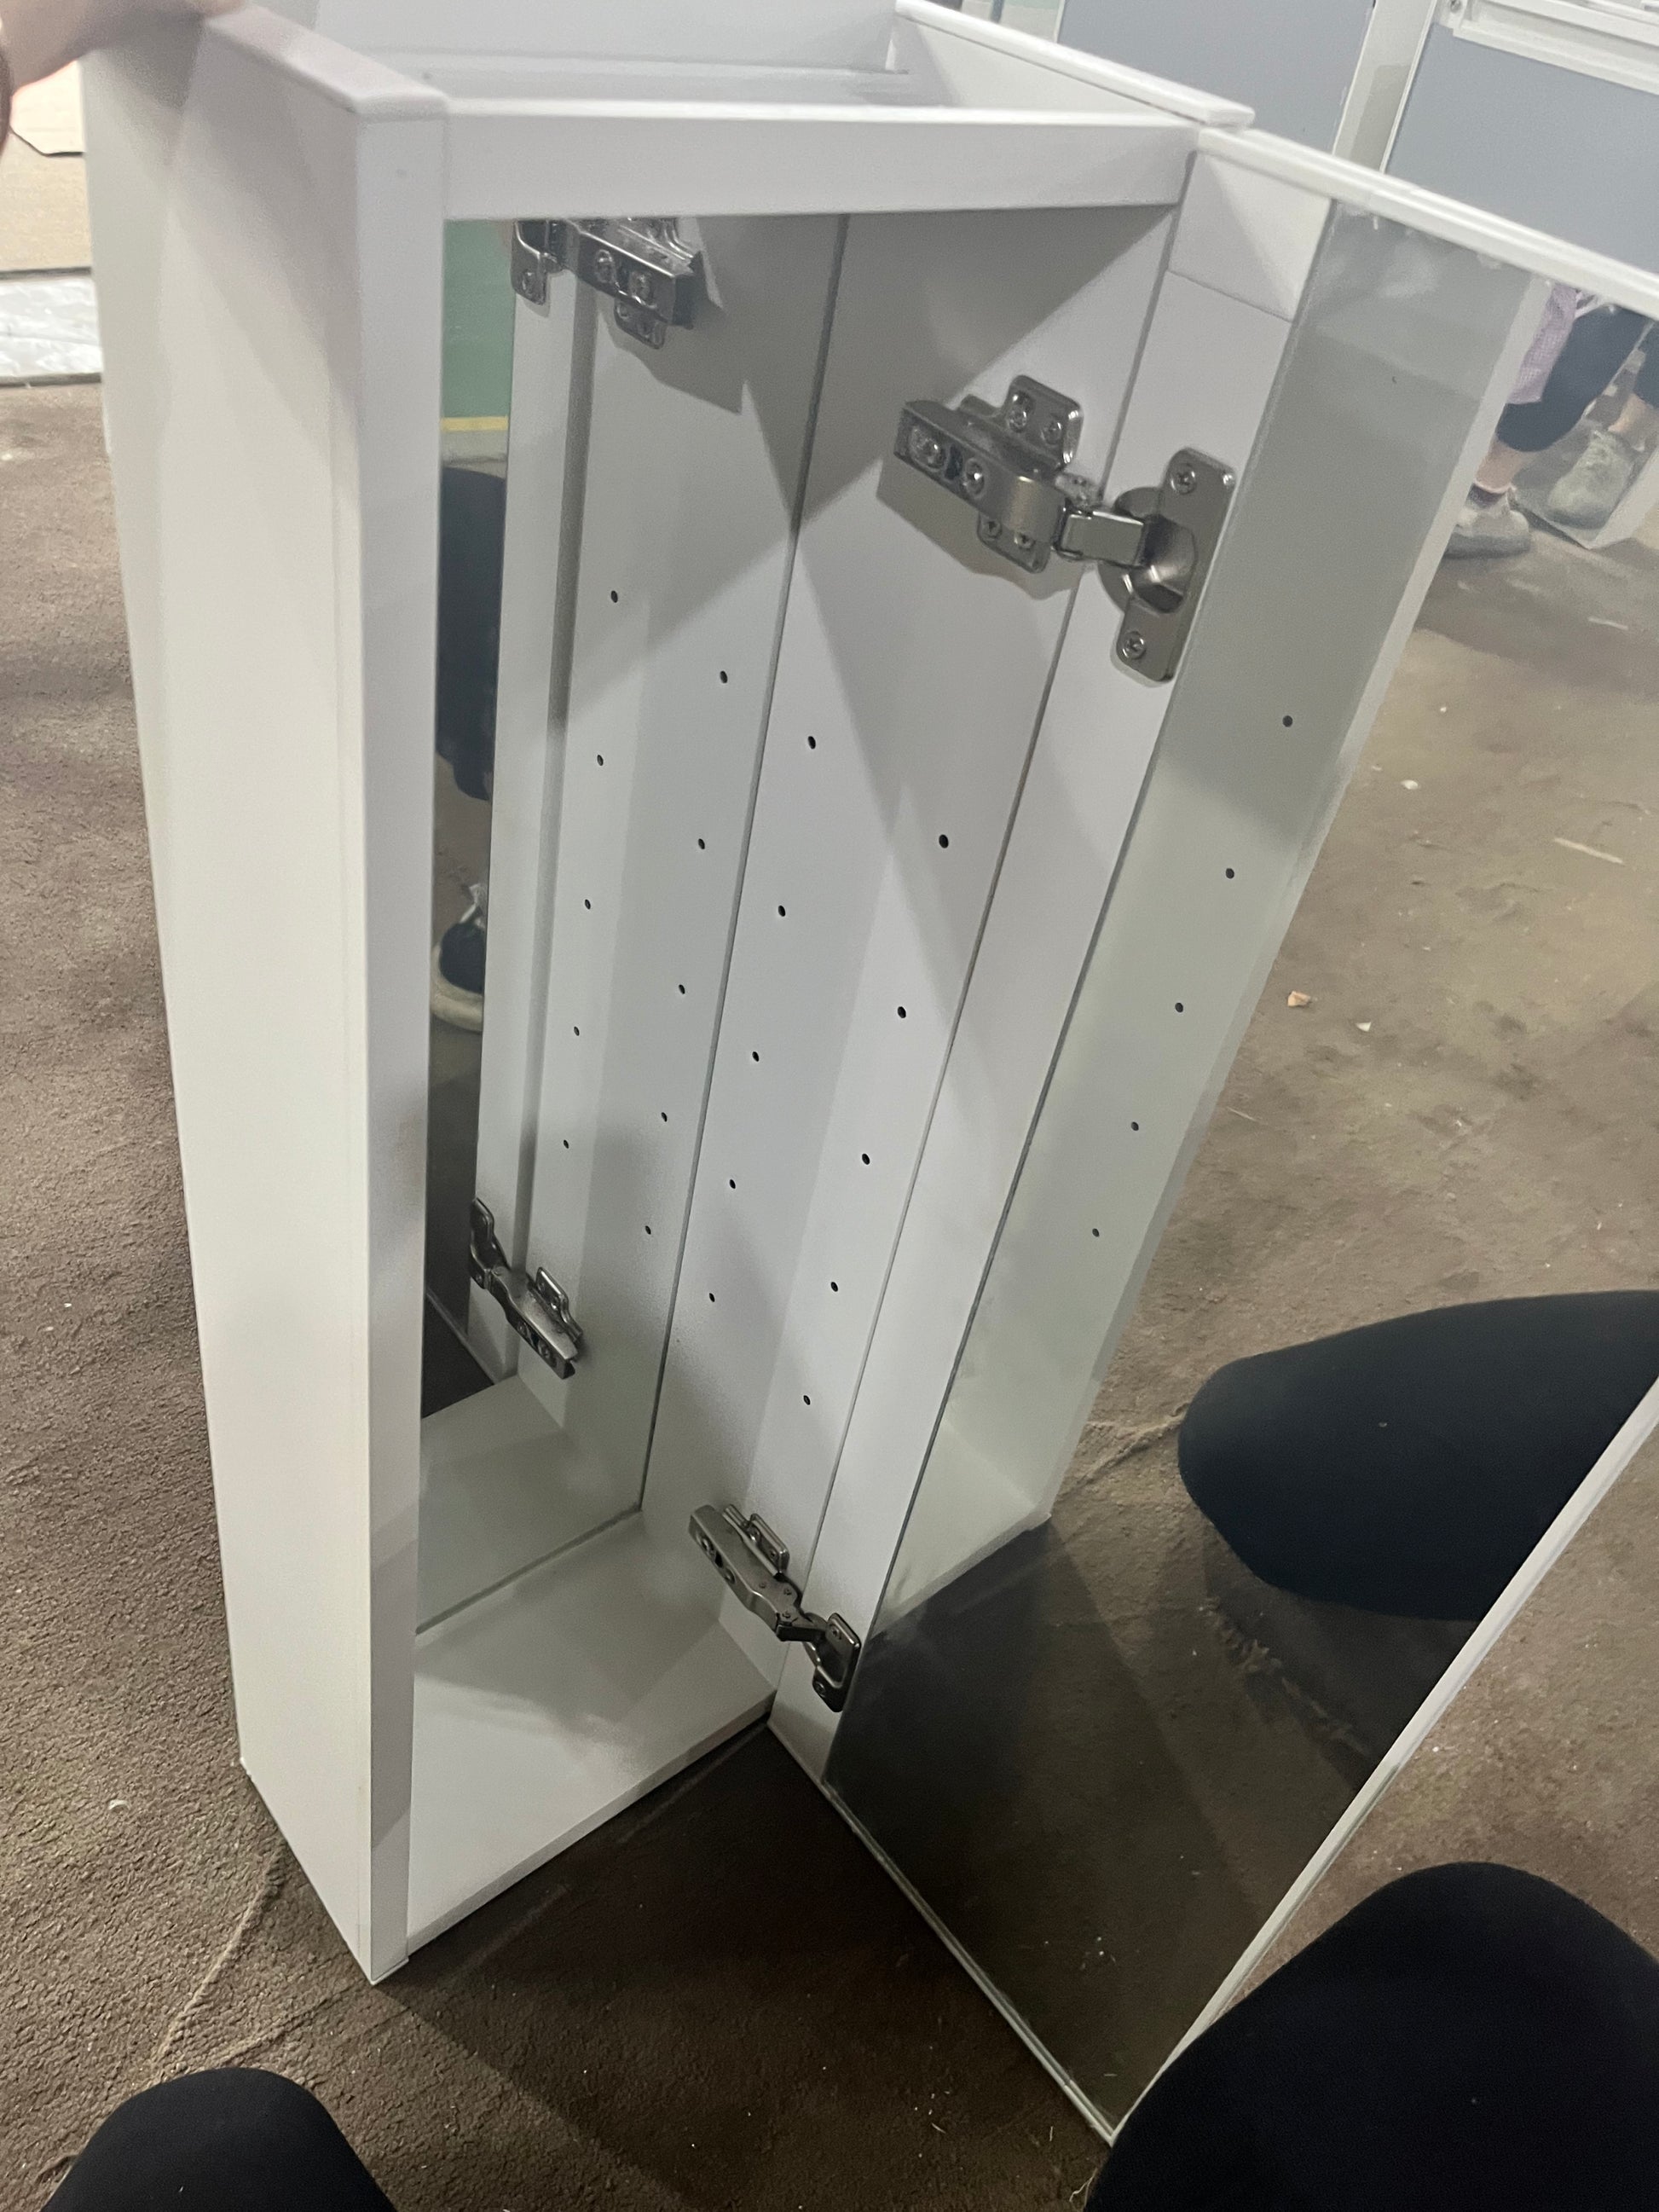 30x10 inch White Medicine Cabinet With Storage white-modern-aluminium